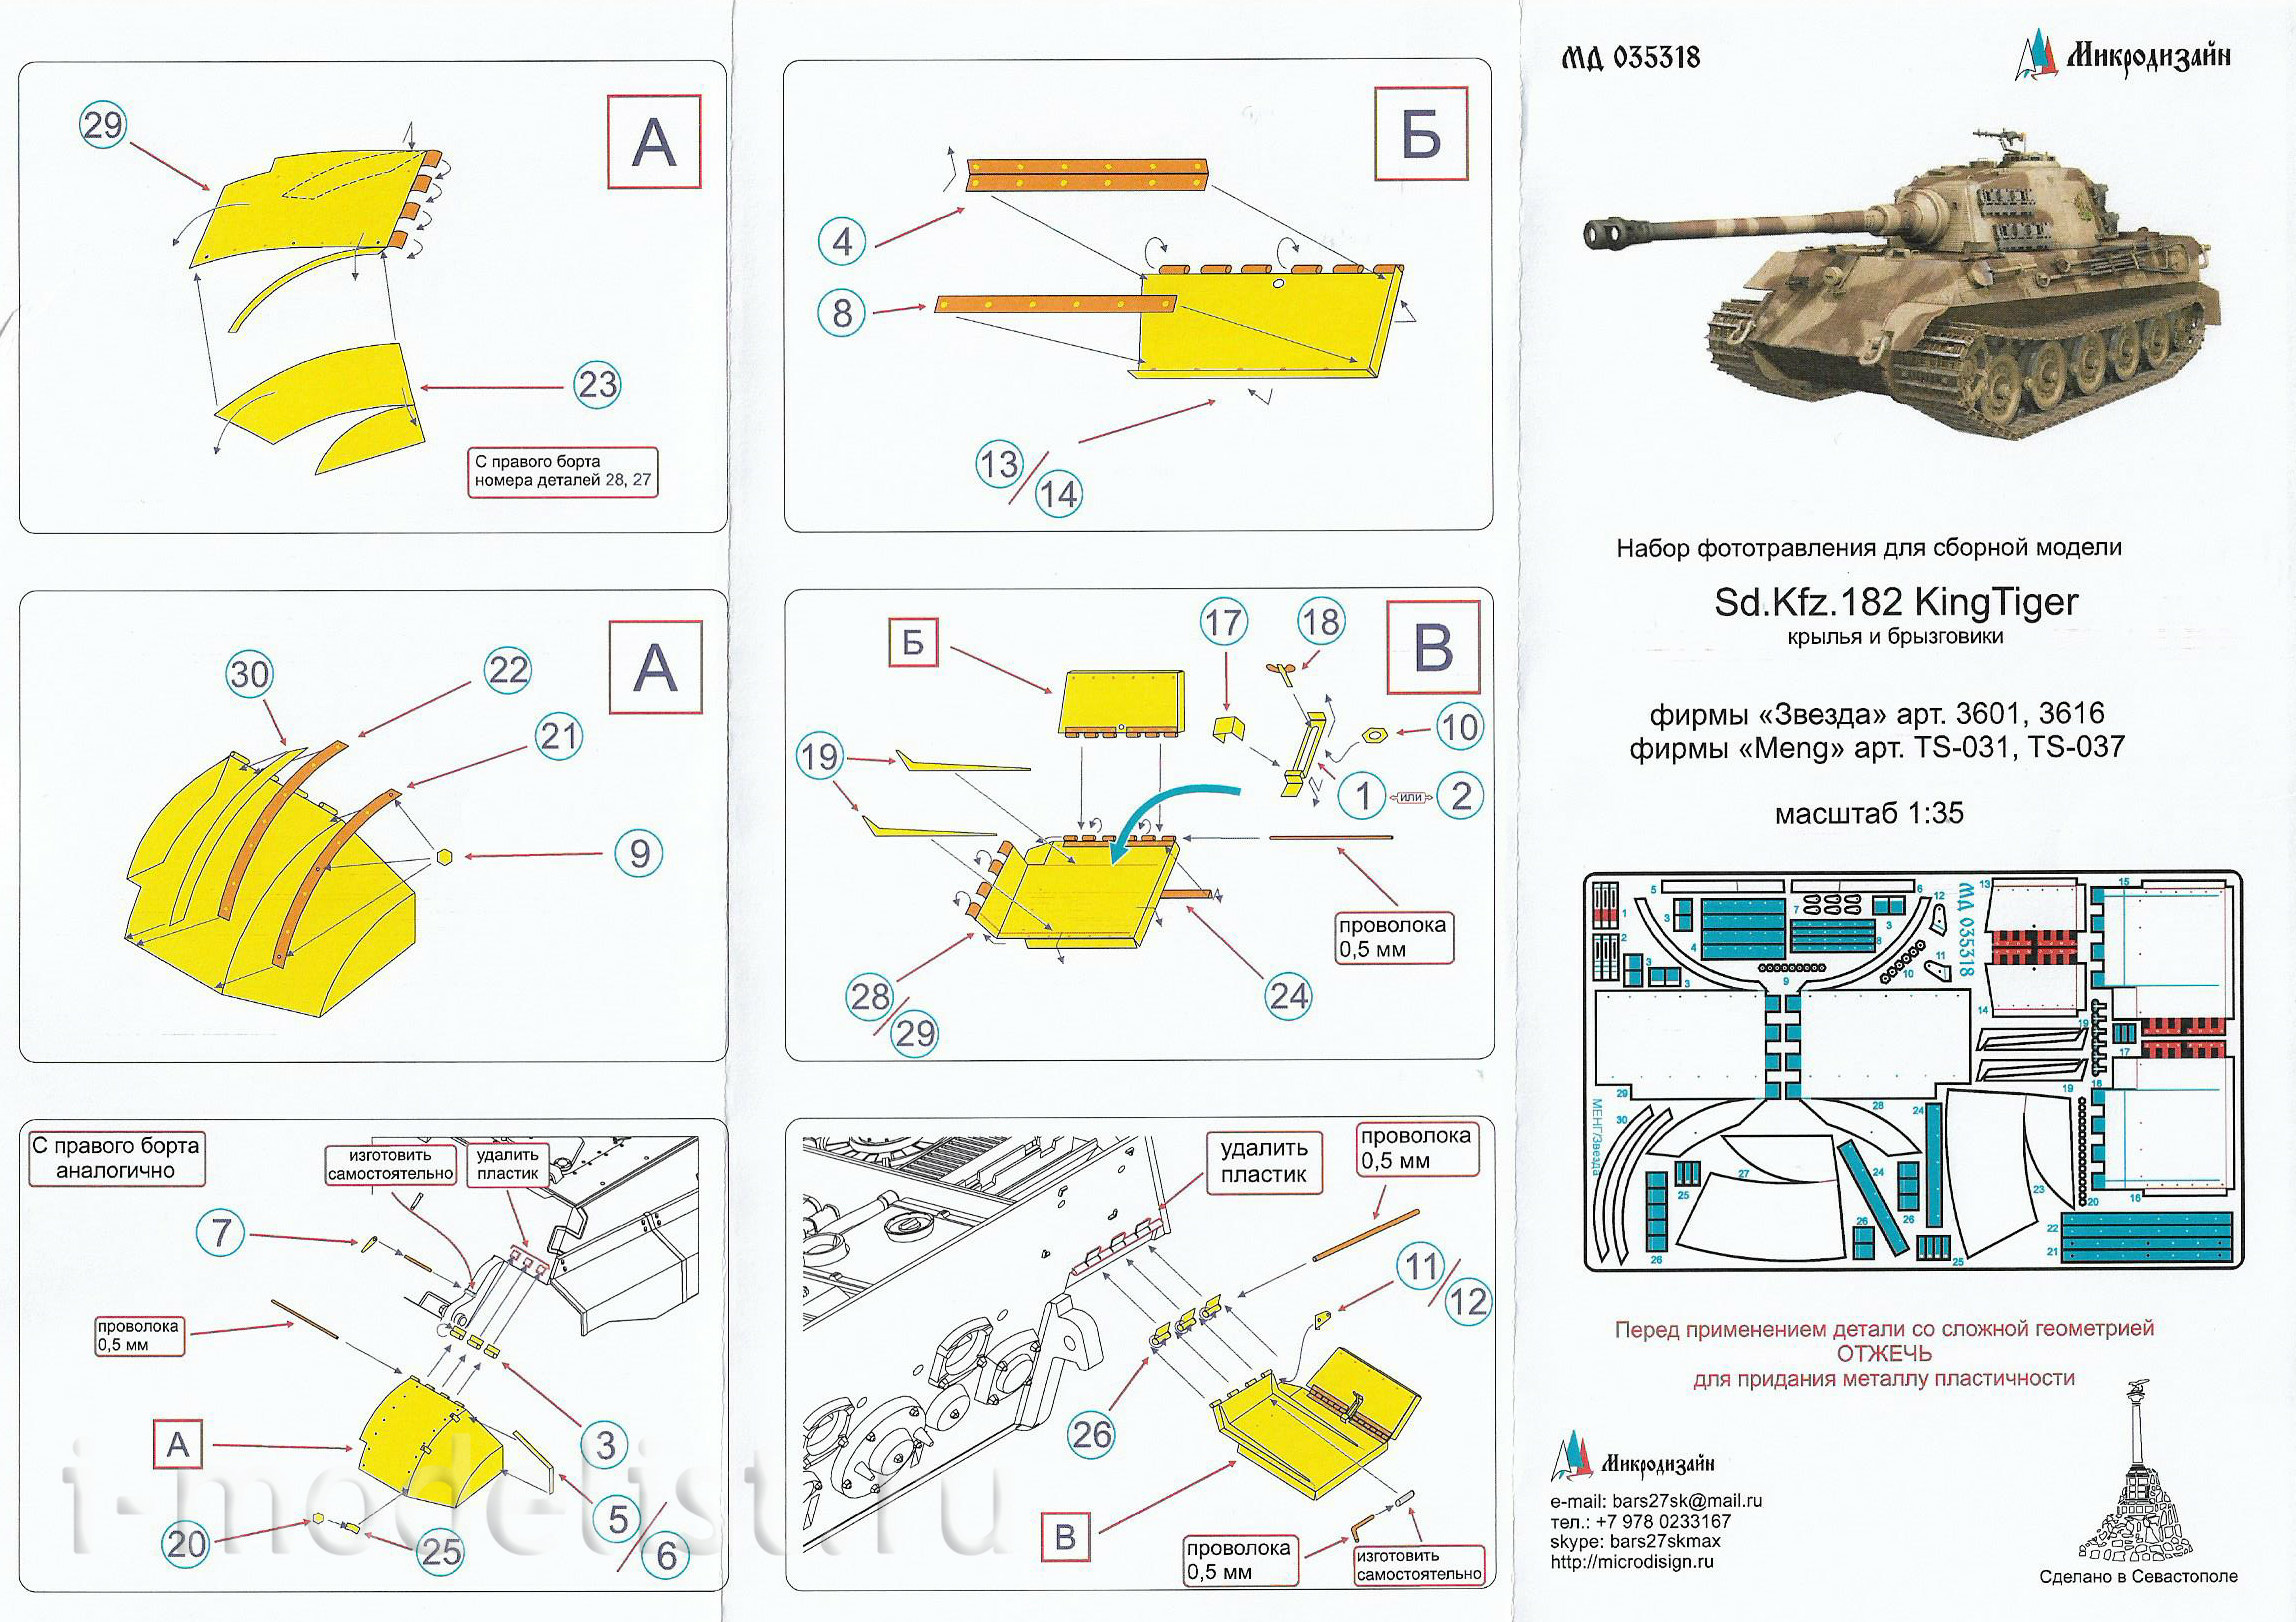 035318 Microdesign 1/35 Sd.Kfz.182 Royal Tiger, wings and mud flaps (Zvezda/Meng)